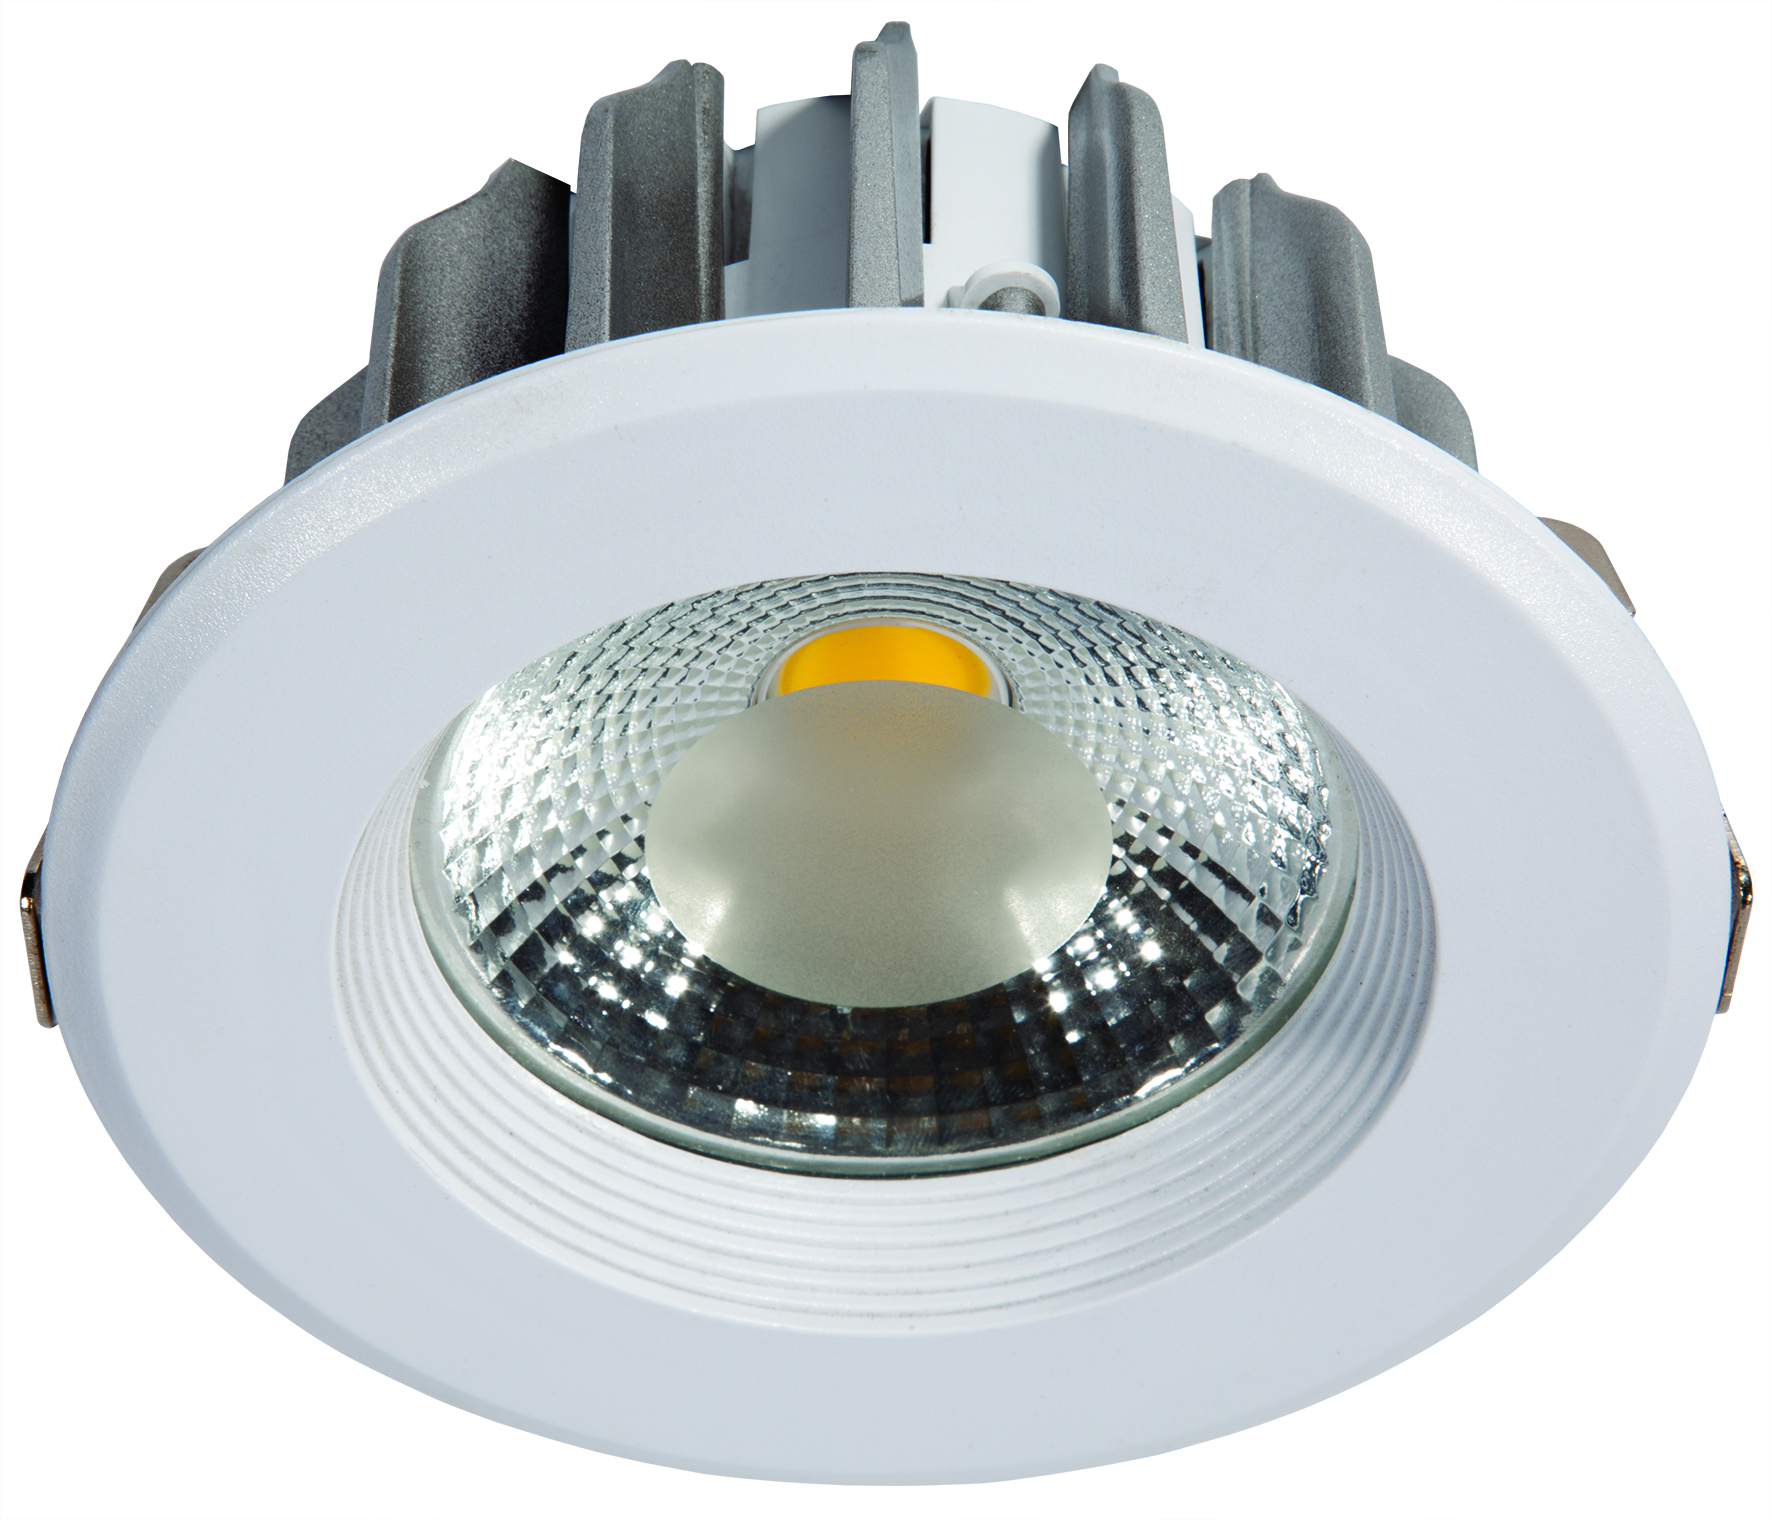 REELTECH medium recessed LED downlight light dali dimmable emergency 0 10v wireless lighting control v2